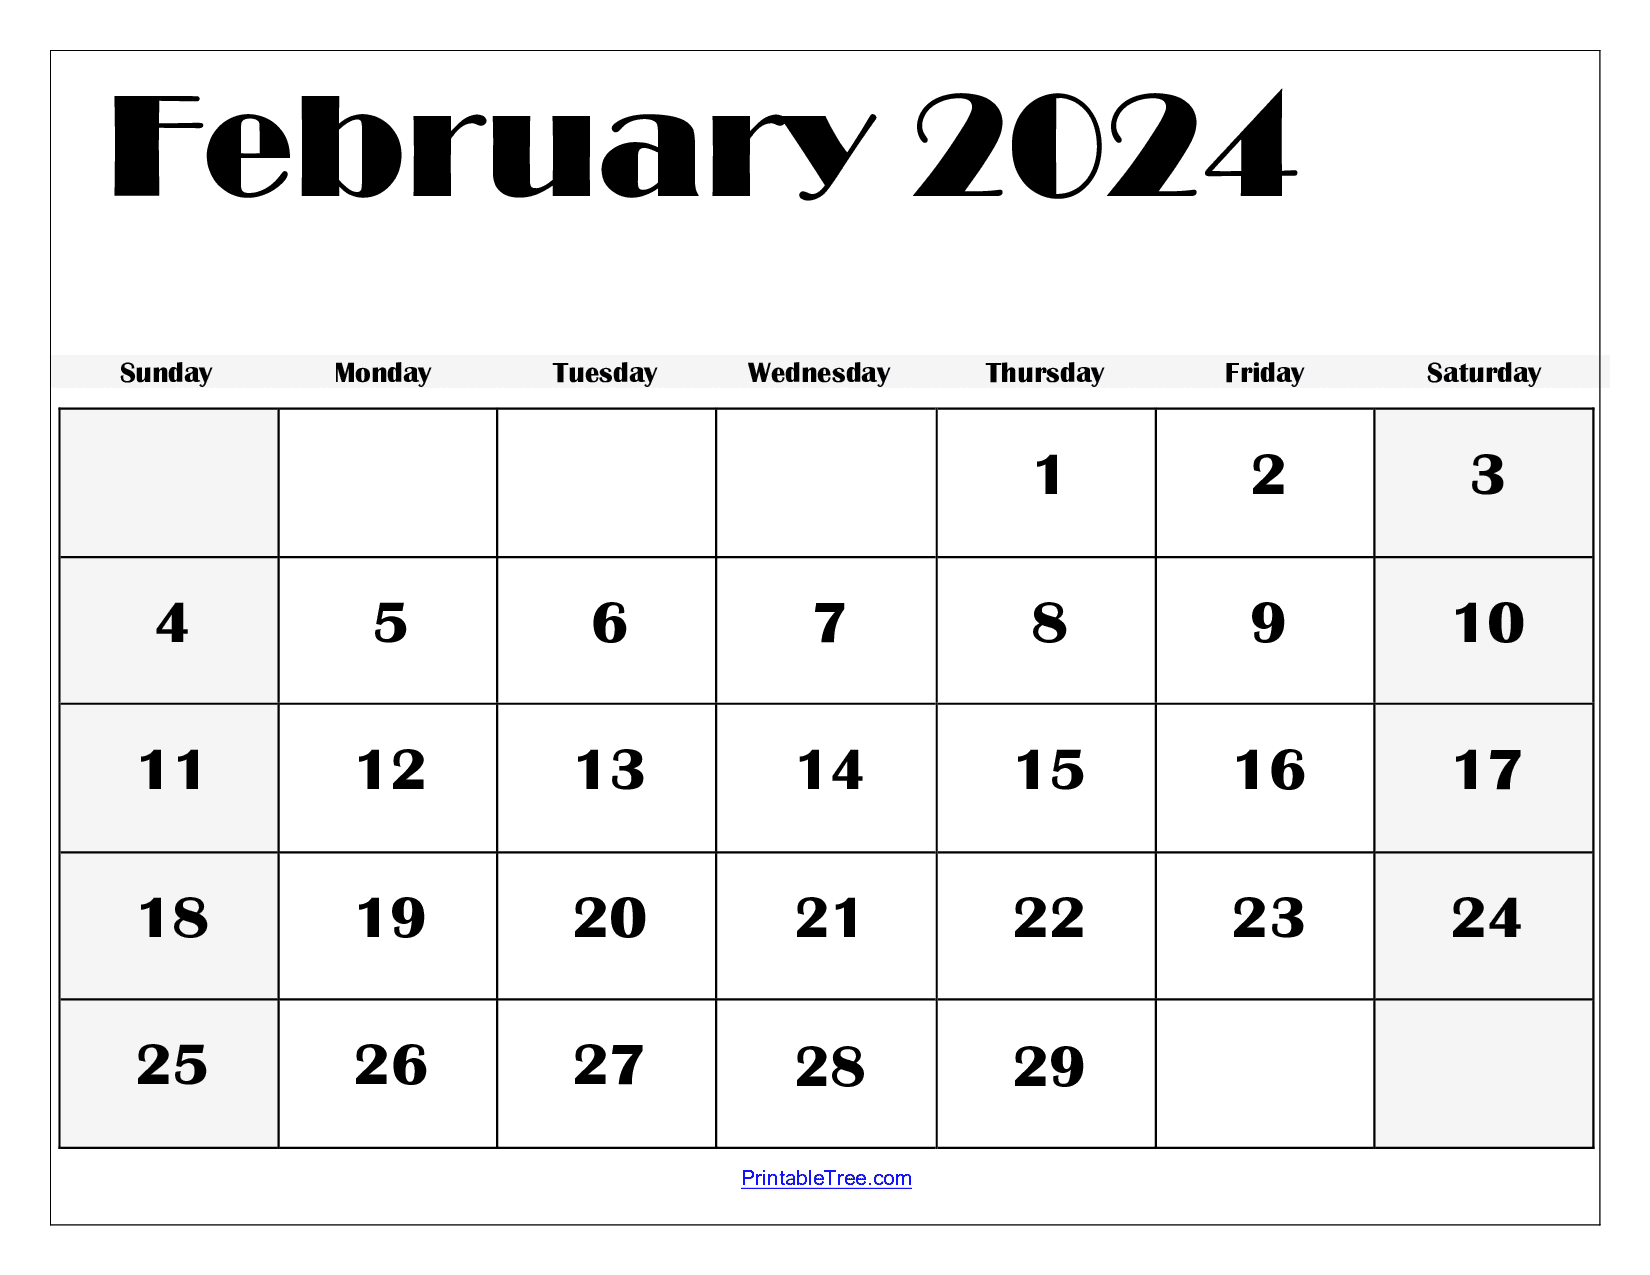 February 2024 Calendar Printable Pdf Template With Holidays for February 2024 Calendar Printable